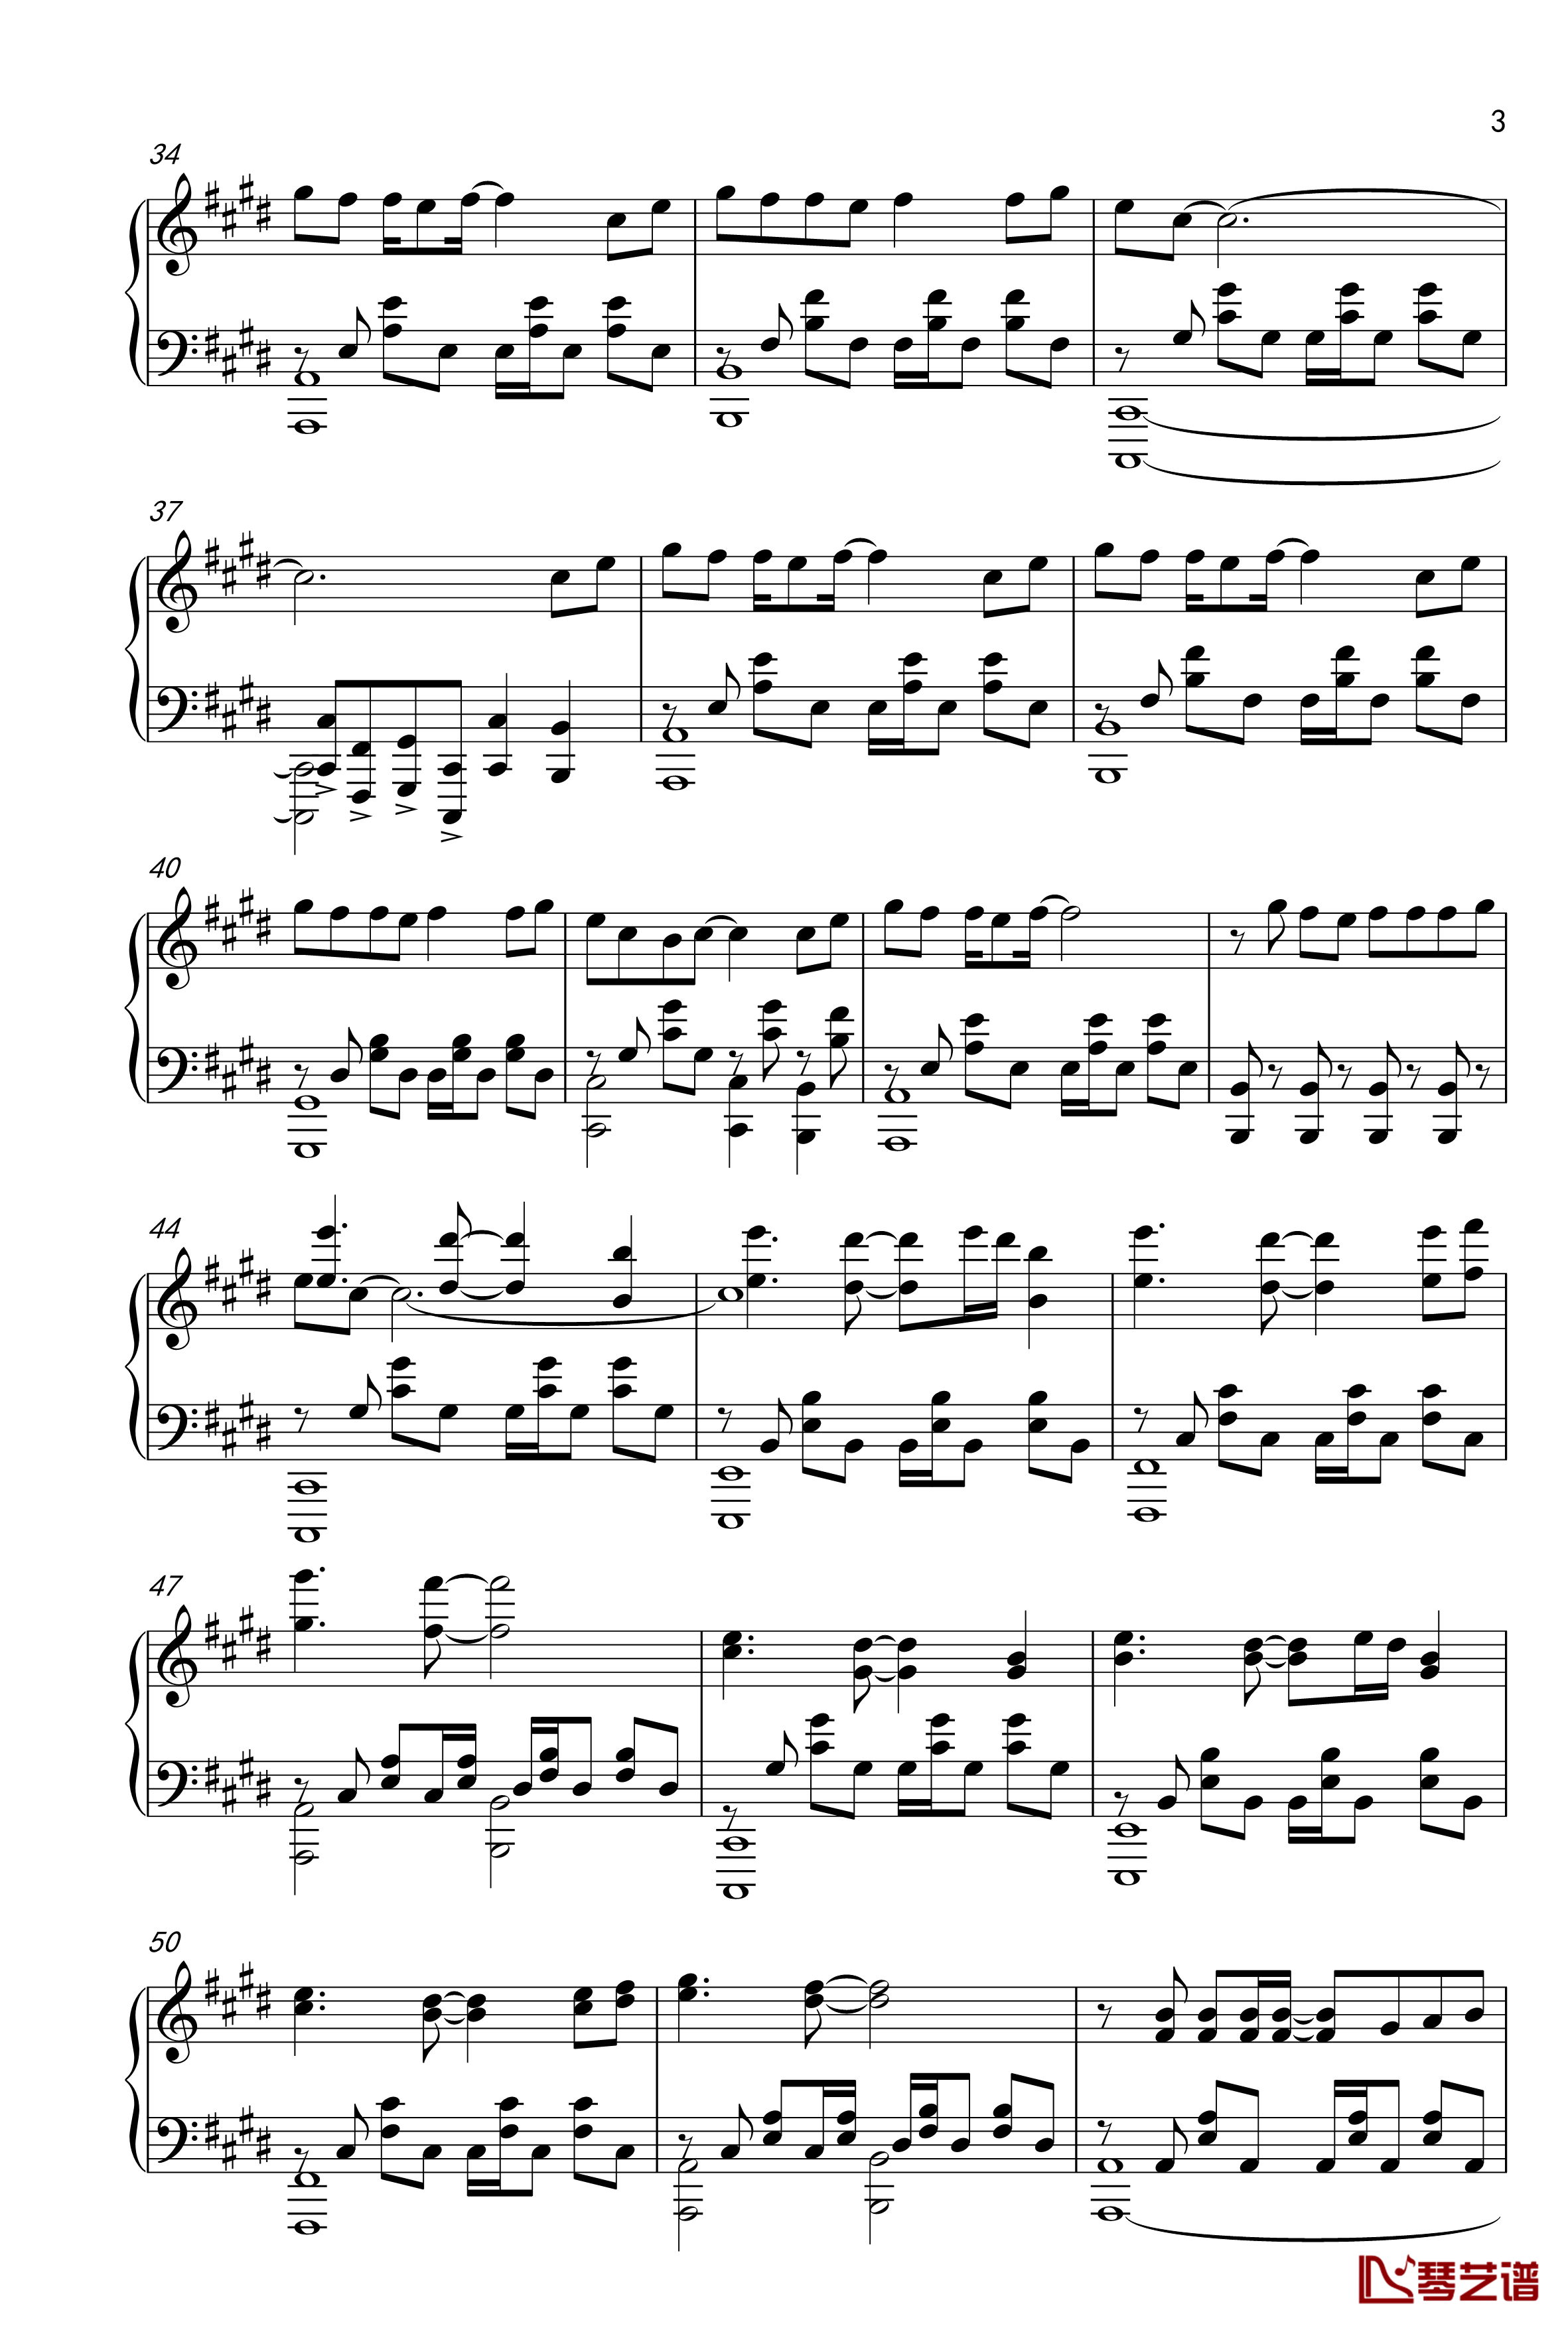 OVERLAP 钢琴谱-《游戏王》第一部190-224话OP-游戏王3